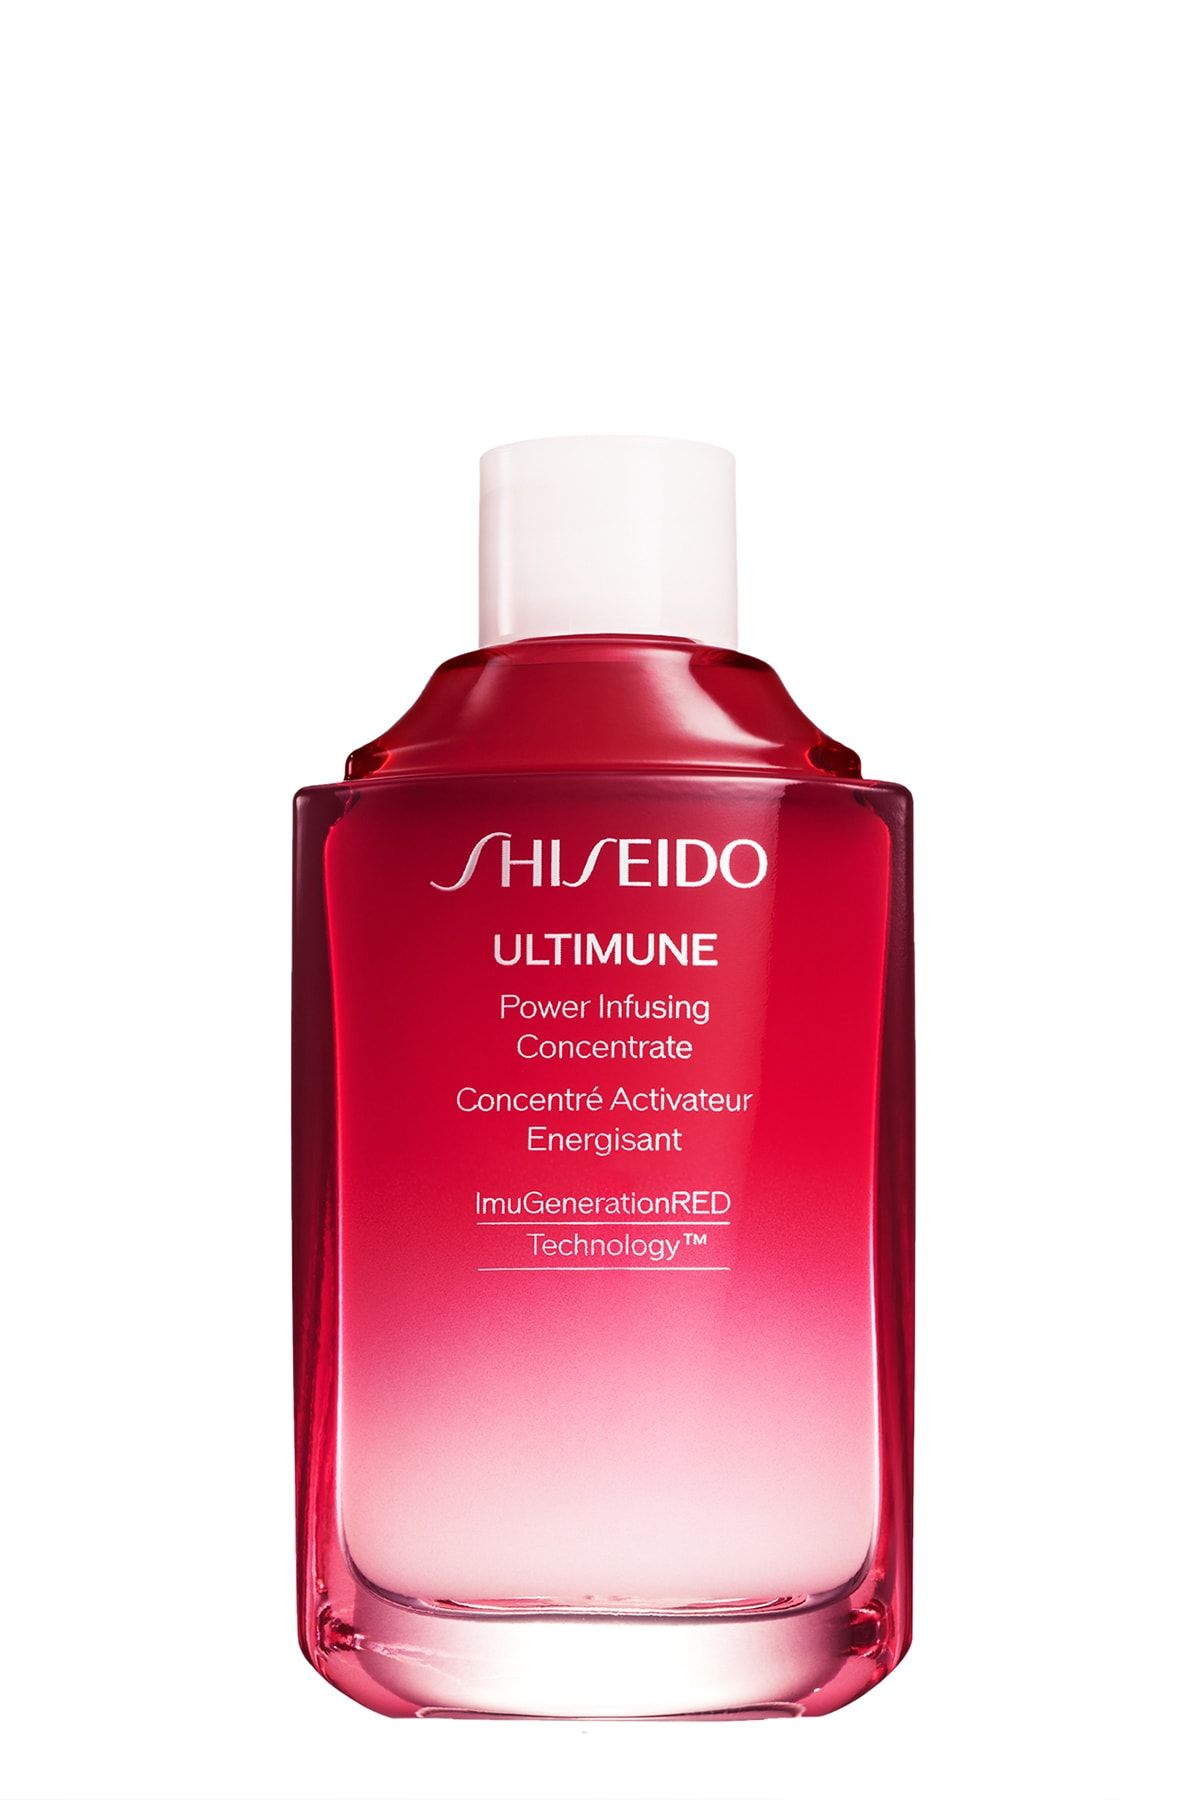 Shiseido ultimune power infusing concentrate. Shiseido Ultimune концентрат. Ultimune концентрат шисейдо Power infusing. Shiseido Ultimune Power infusing Concentrate 3.0 Refill. Shiseido Ultimune концентрат хранение.